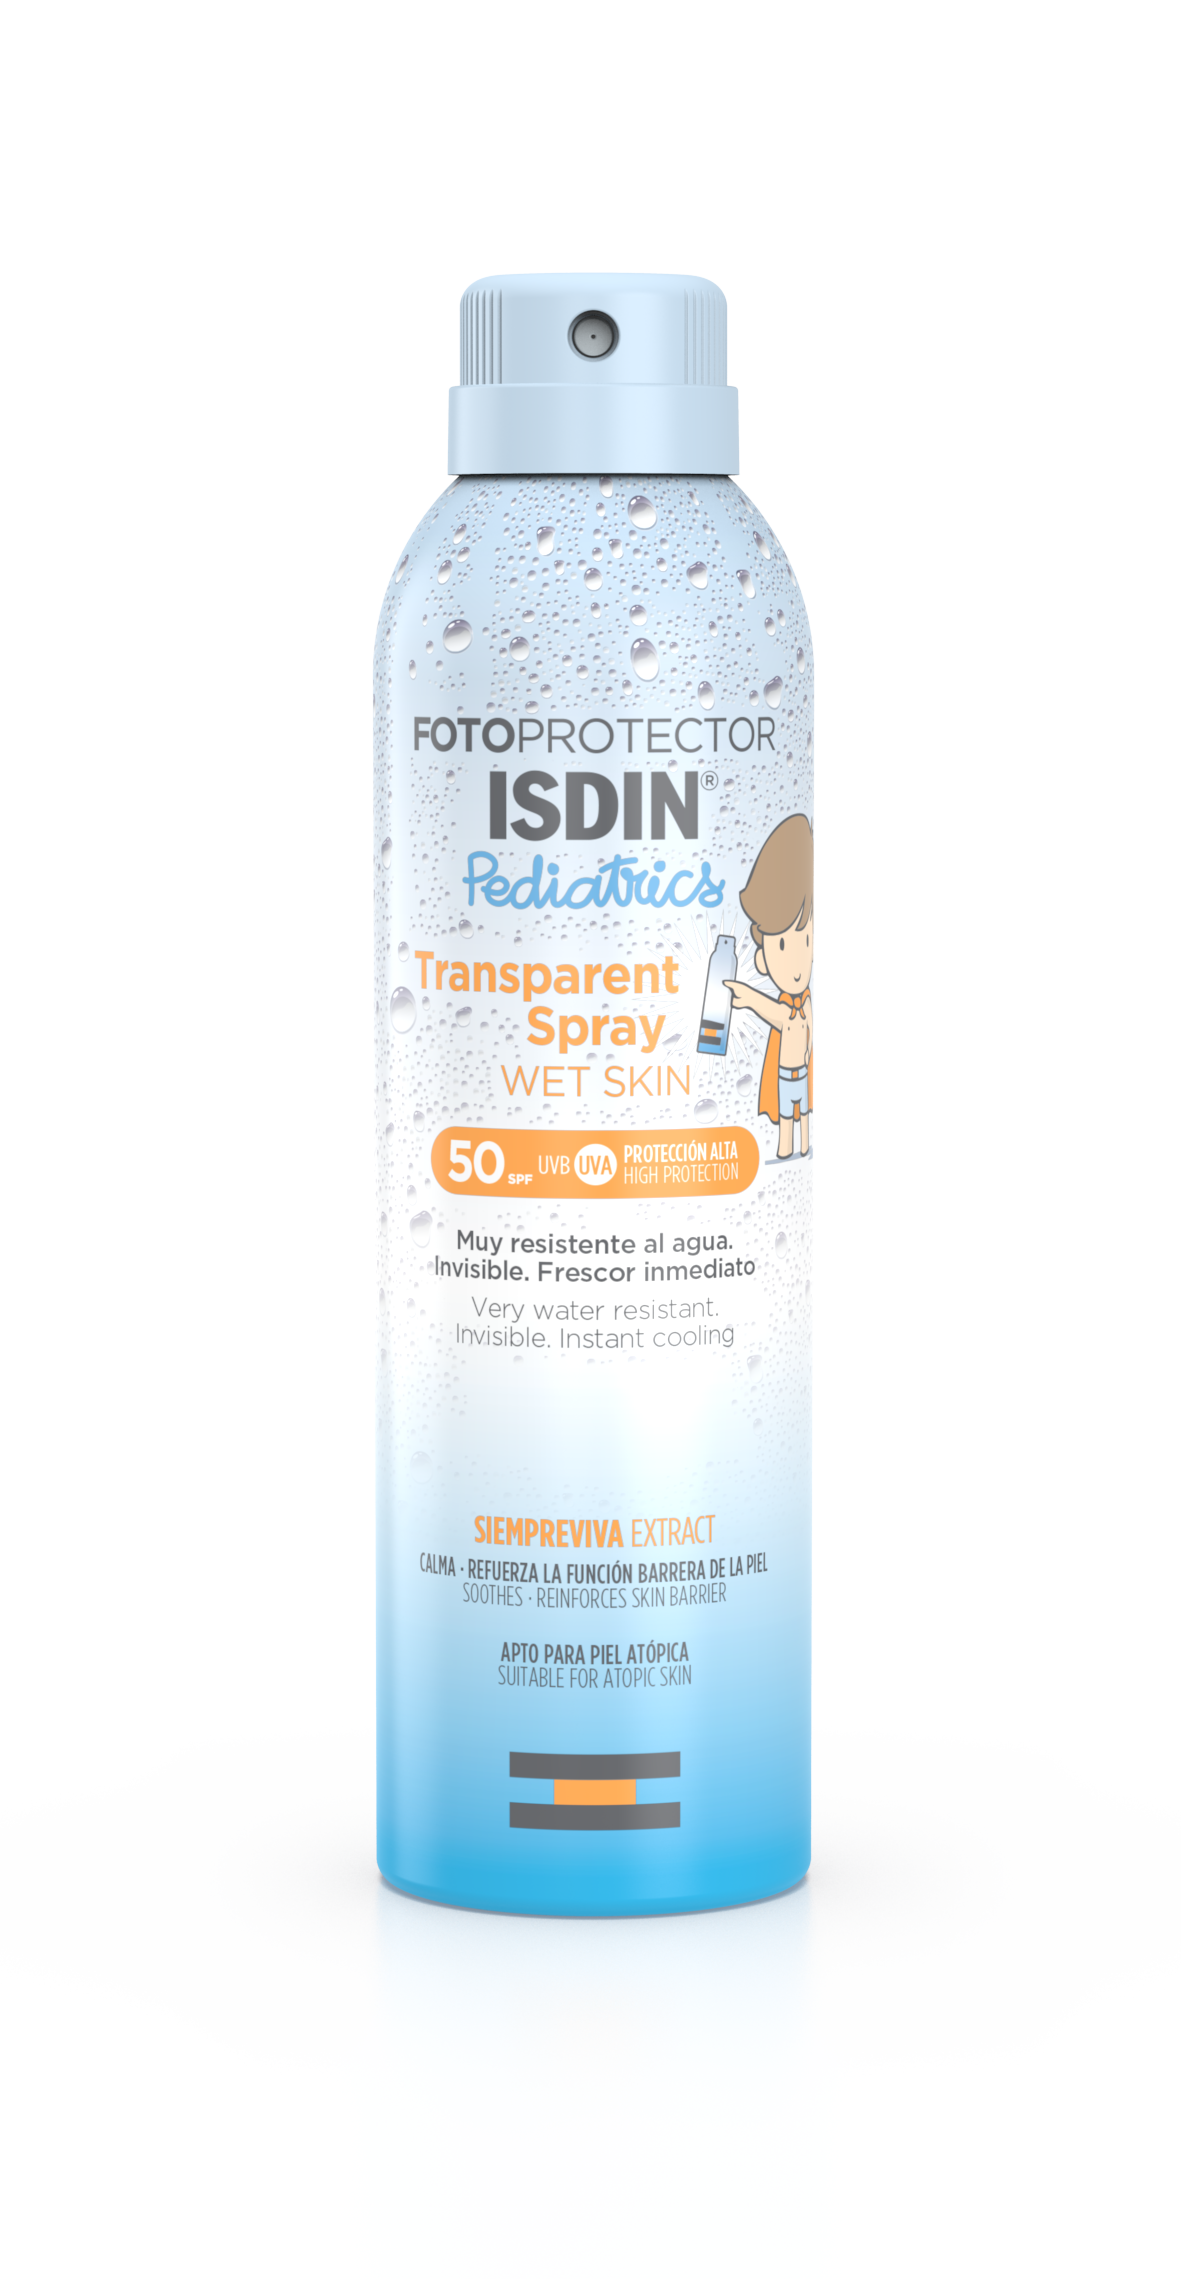 Fotoprotector ISDIN Pediatrics Transparent Spray Wet Skin 2021